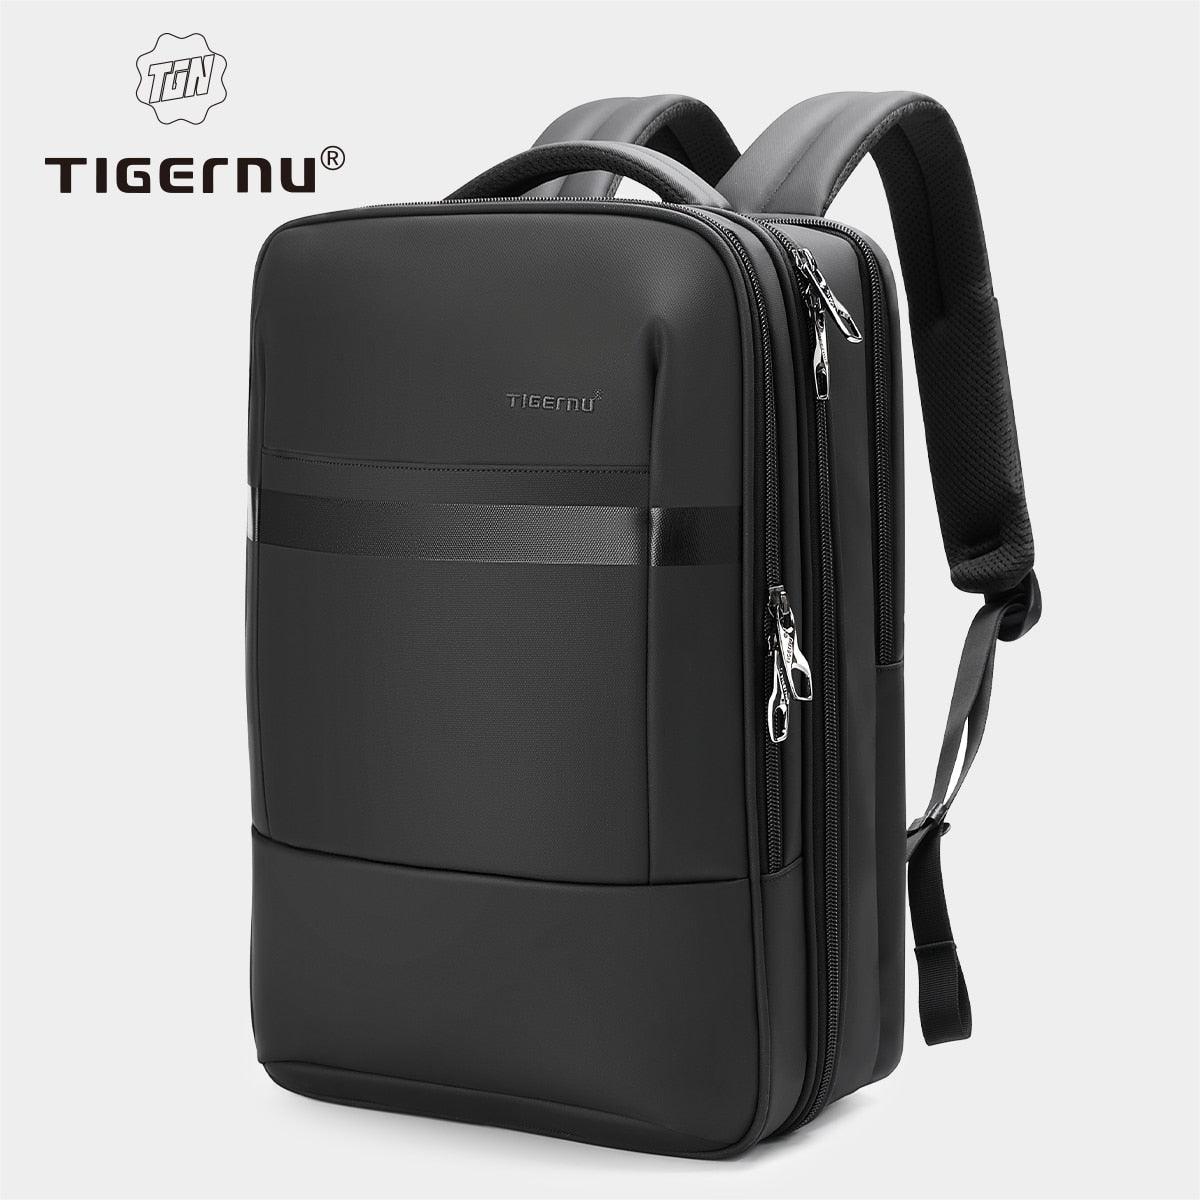 Lifetime Warranty New Anti theft 15.6inch Laptop Backpack Men TPU Waterproof Travel Backpack Male School Bag For Men Luggage Bag - YOURISHOP.COM